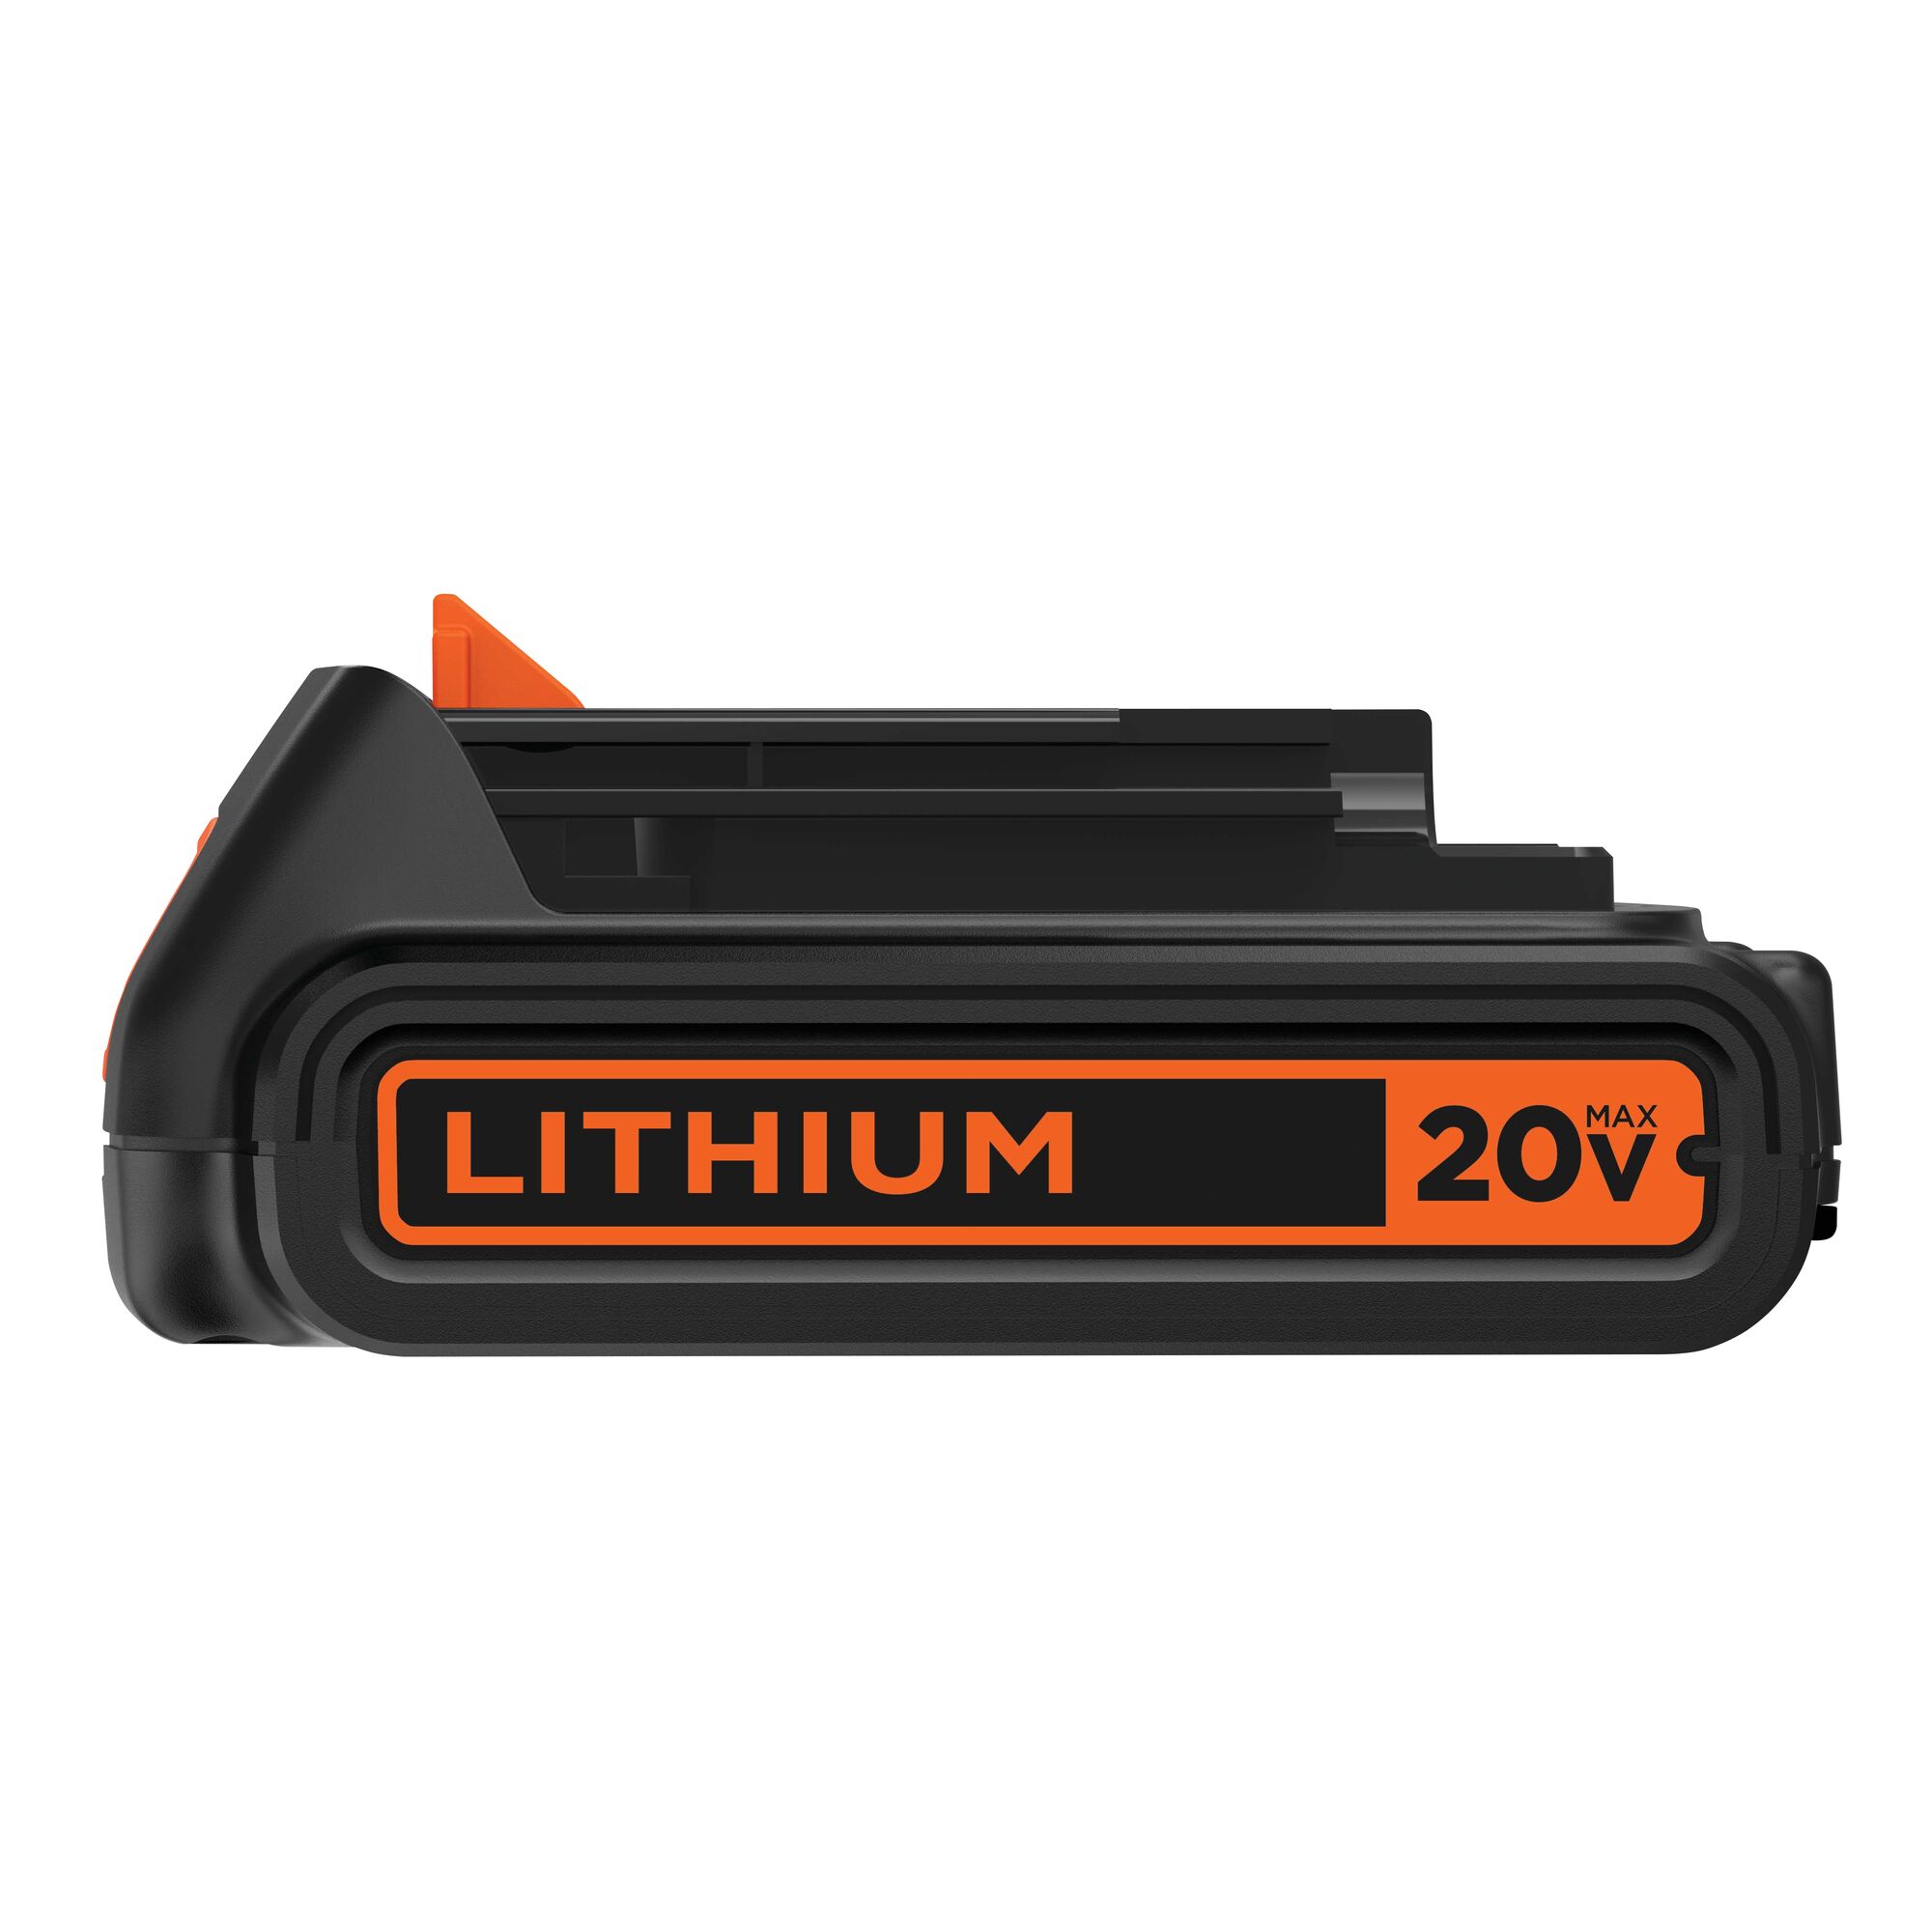 20 Volt Lithium Battery.